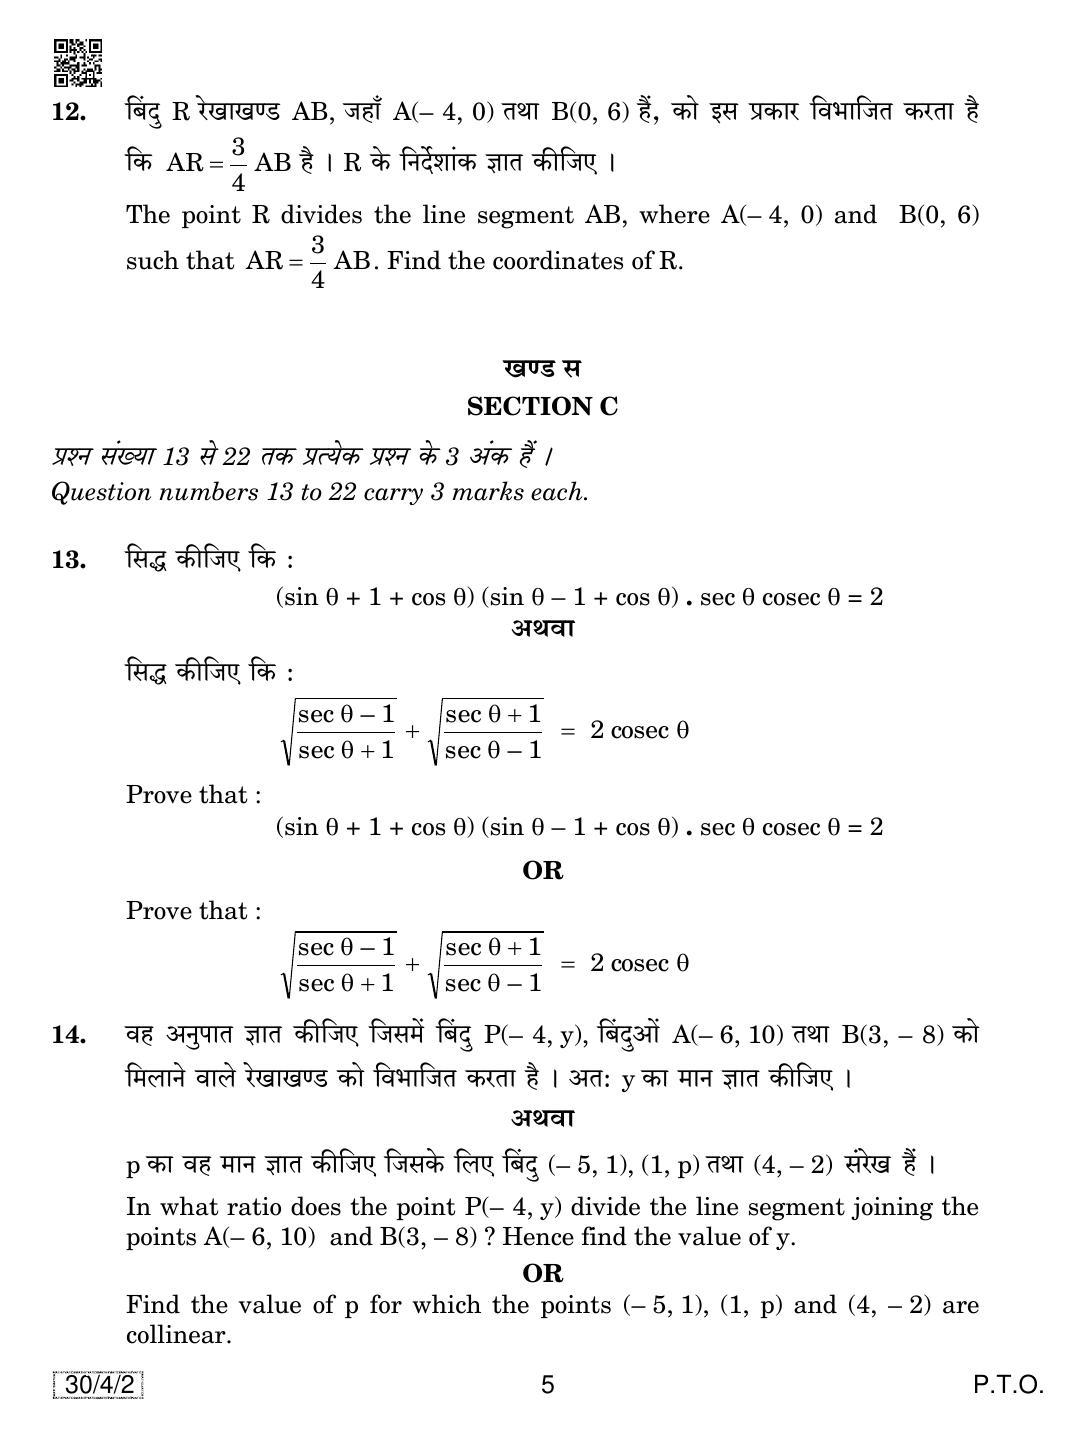 CBSE Class 10 Maths (30/4/2 - SET 2) 2019 Question Paper - Page 5